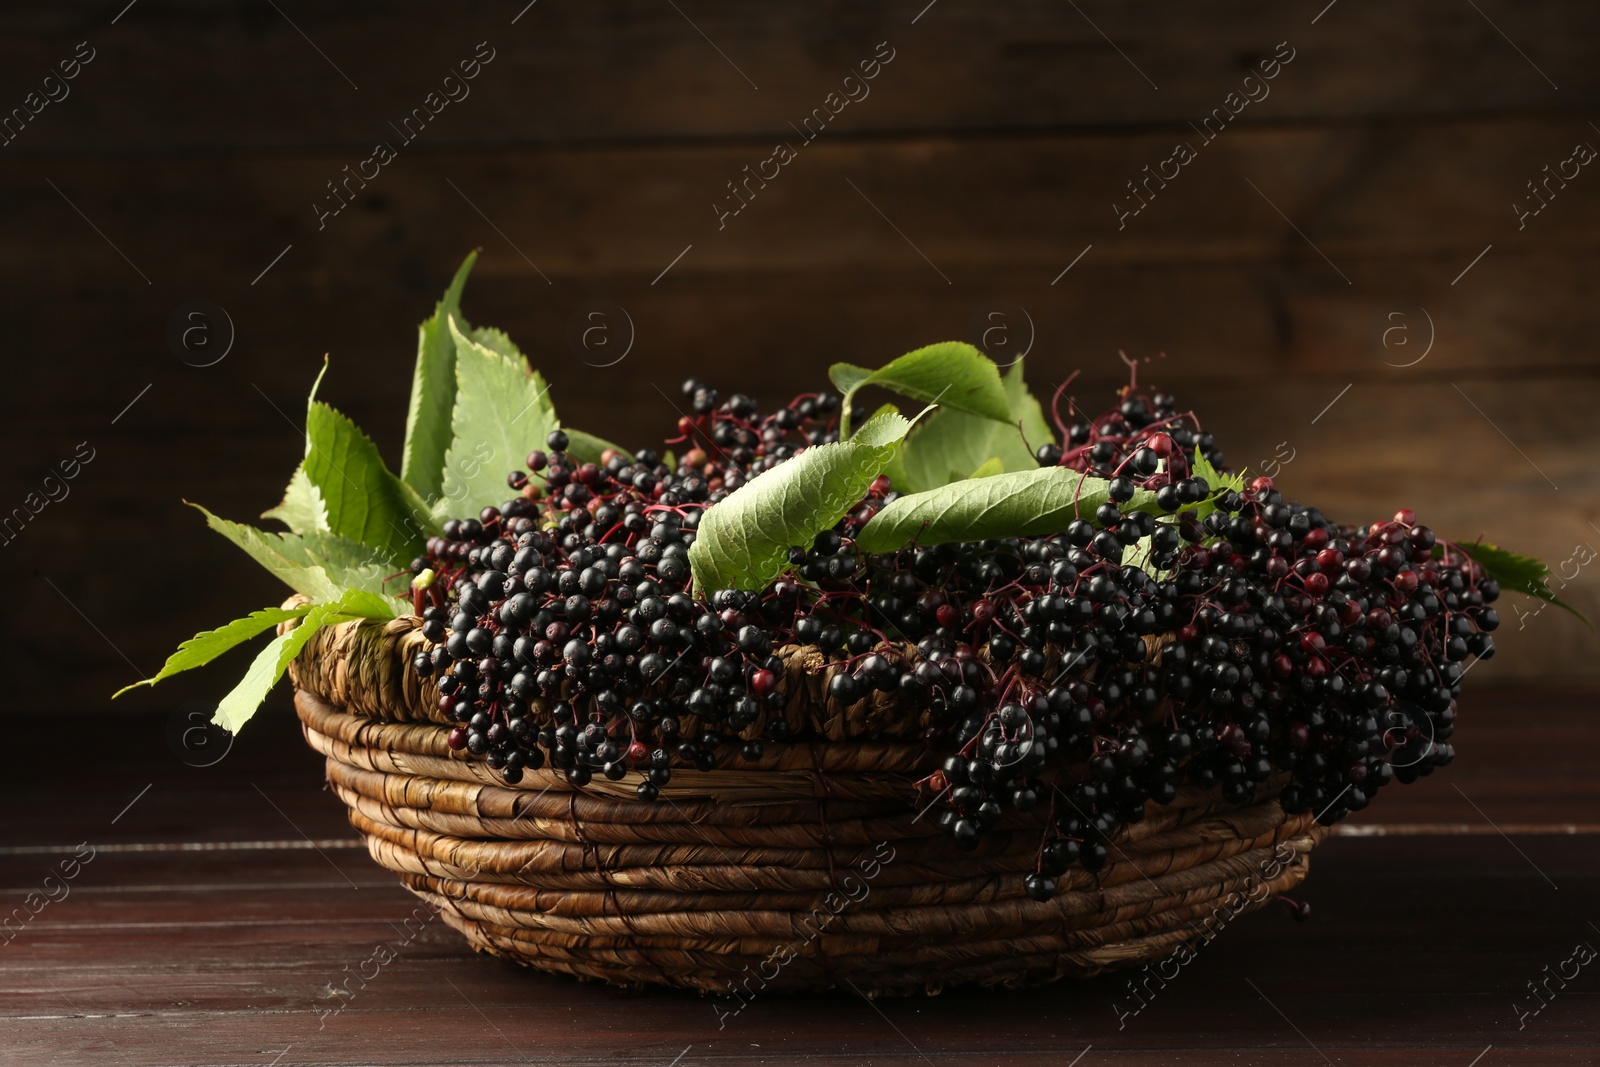 Photo of Ripe elderberries with green leaves in wicker basket on wooden table